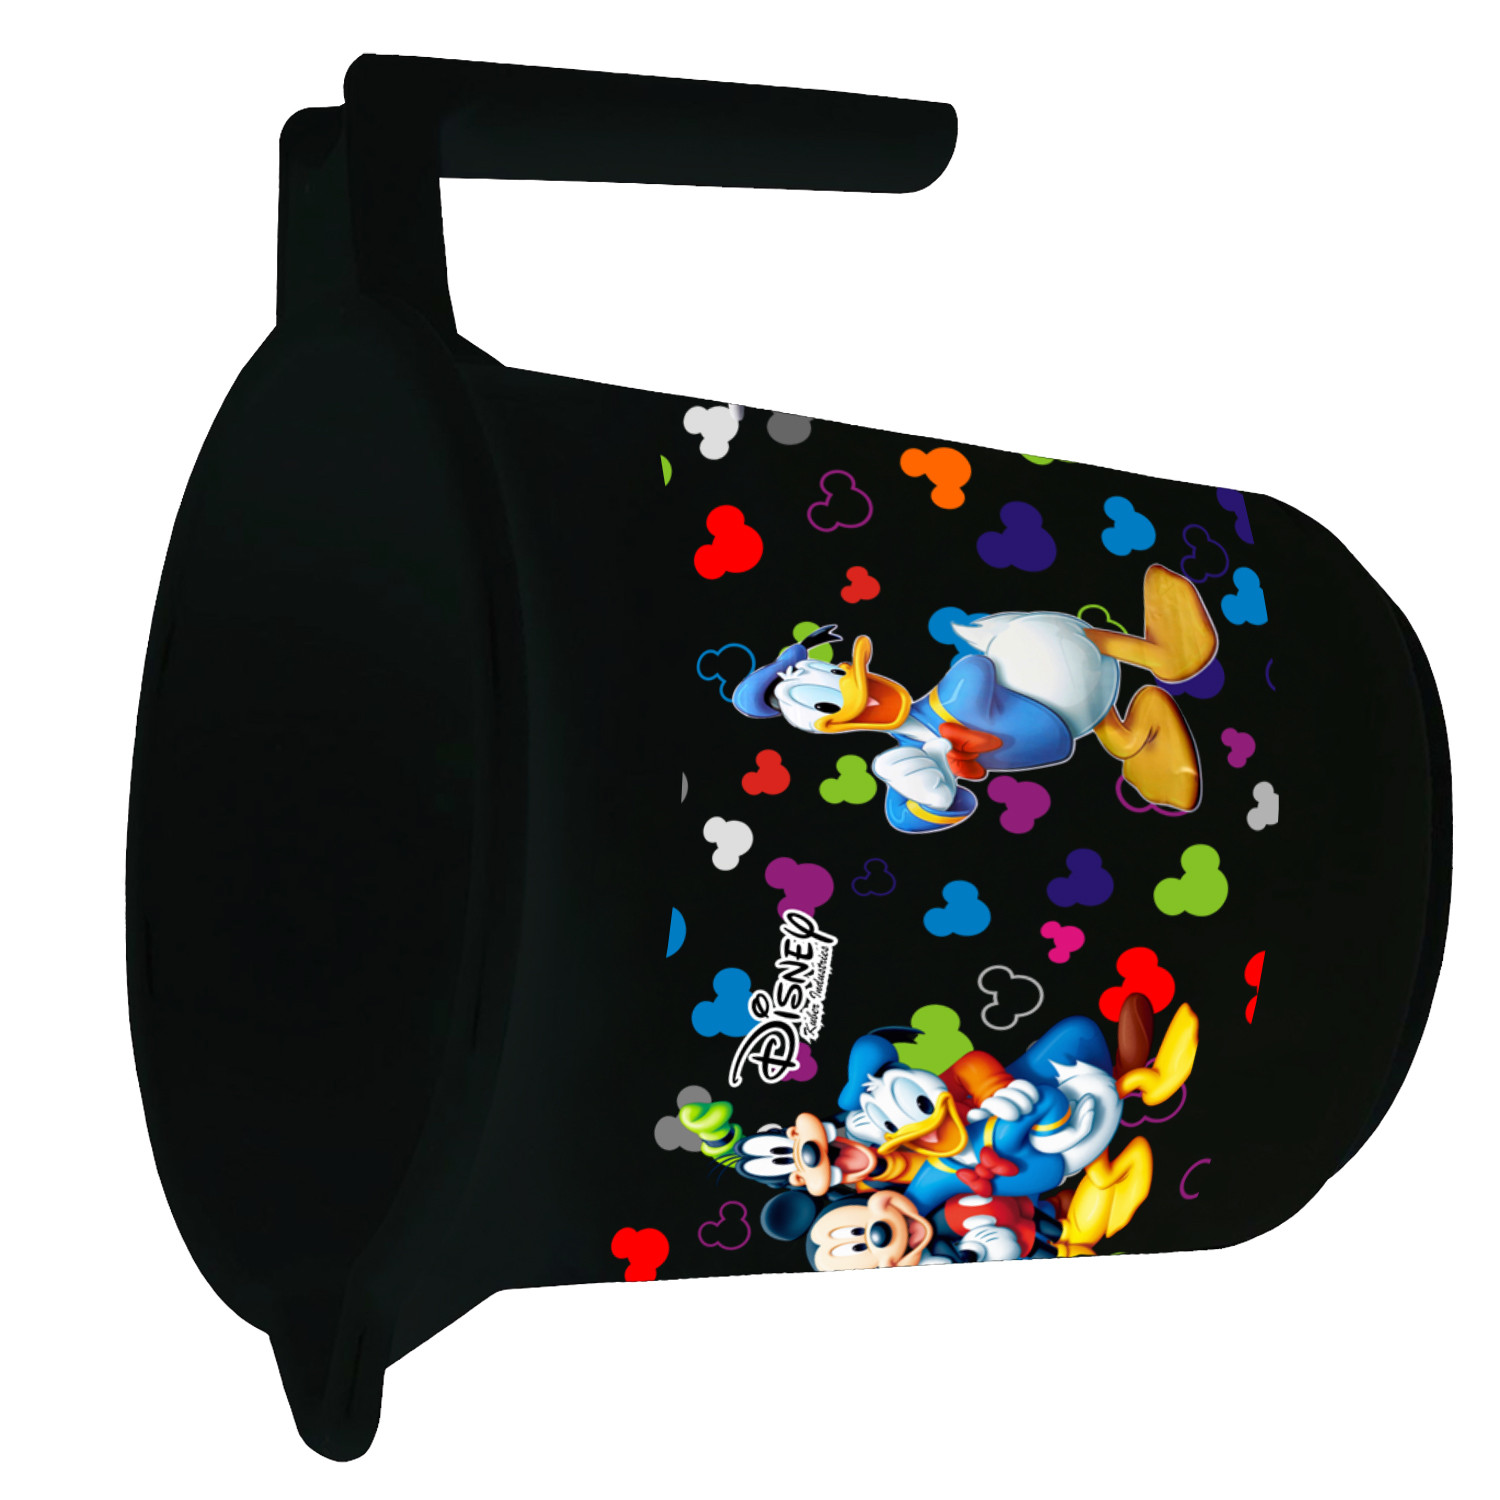 Kuber Industries Disney Team Mickey Print Plastic Bathroom Set of 5 Pieces with Bucket, Tub, Stool, Dustbin & Mug (Black)-KUBMART15273 -HS_35_KUBMART17527